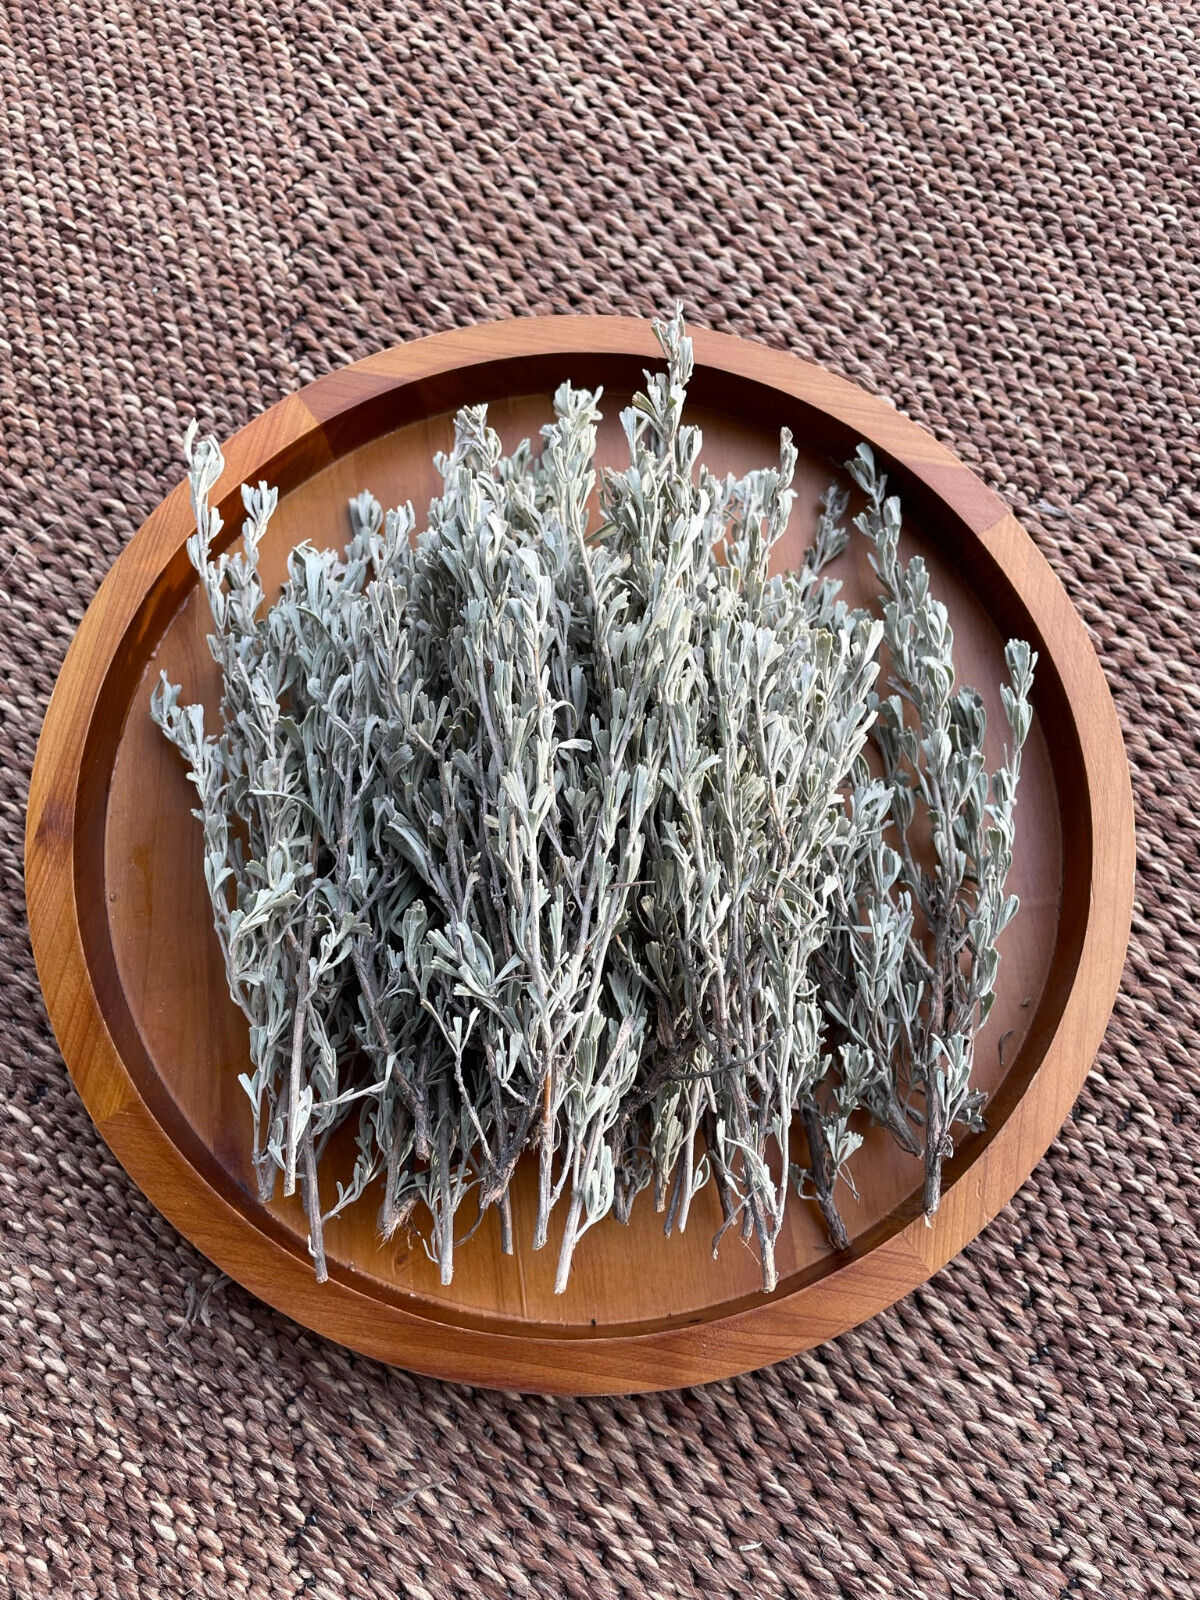 4oz Fresh Cut Sage Artemisia Tridentata Big Sagebrush Wild Native SMUDGING